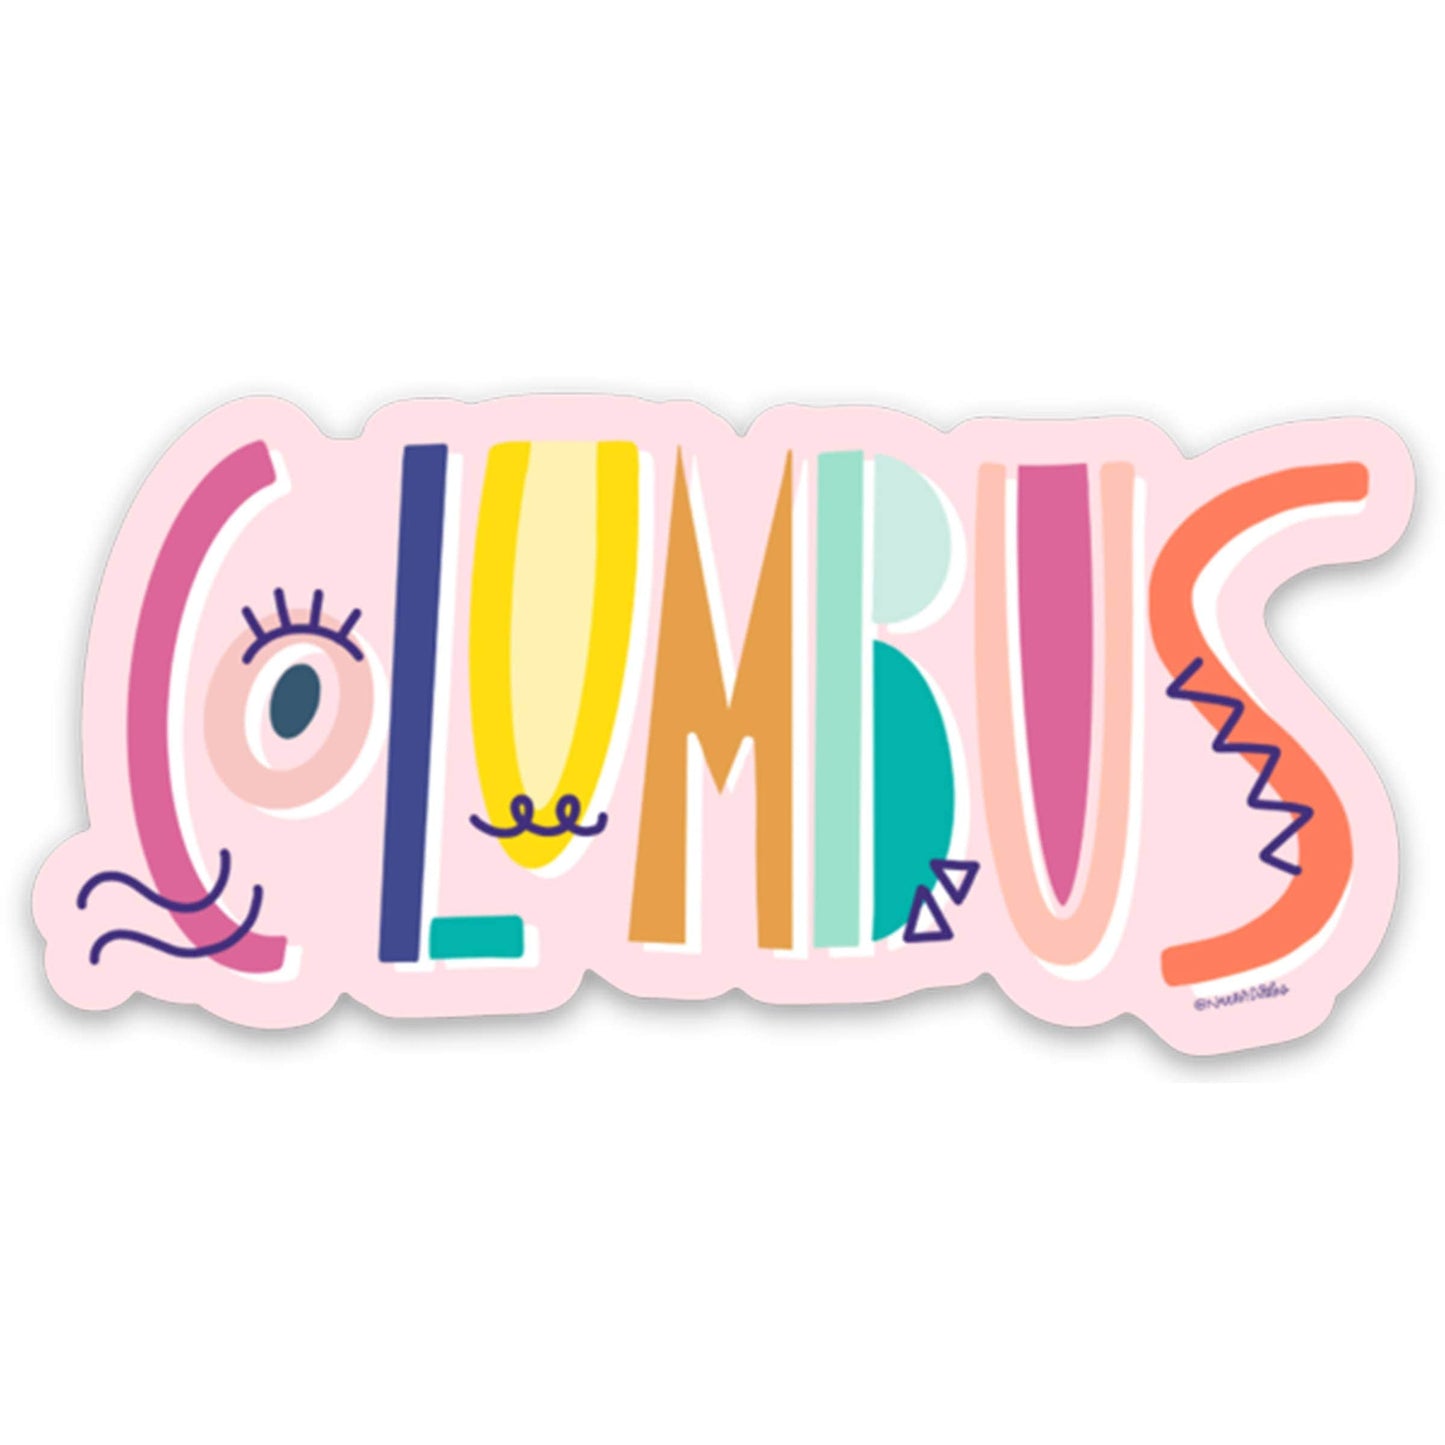 Creative Columbus Sticker